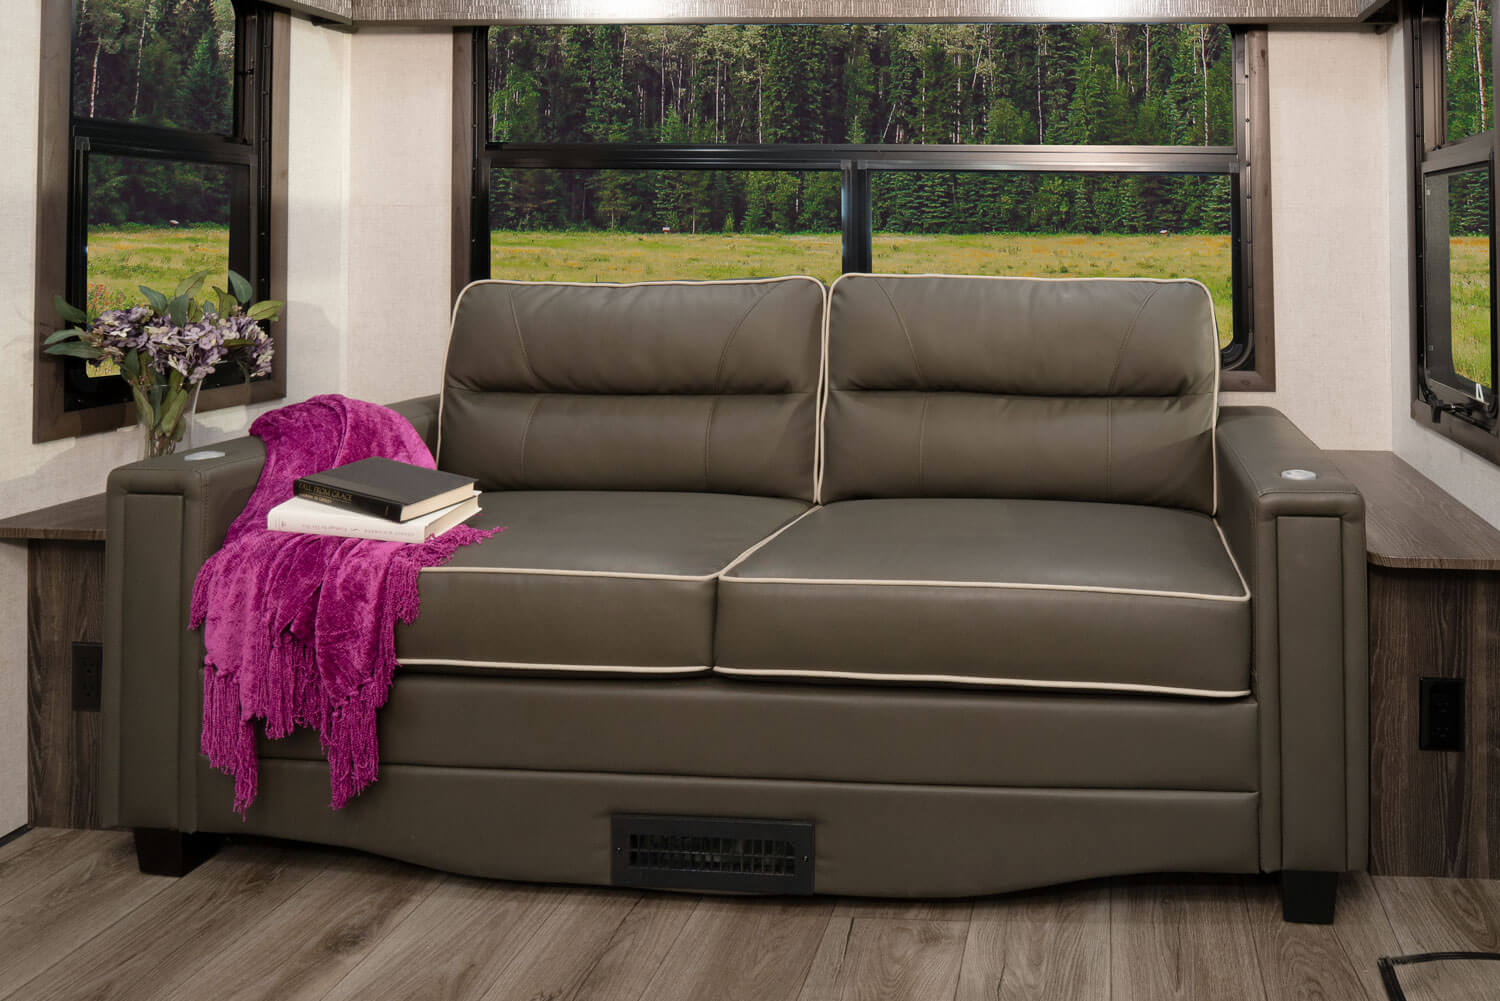 2020 Open Range OT322RLS Couch